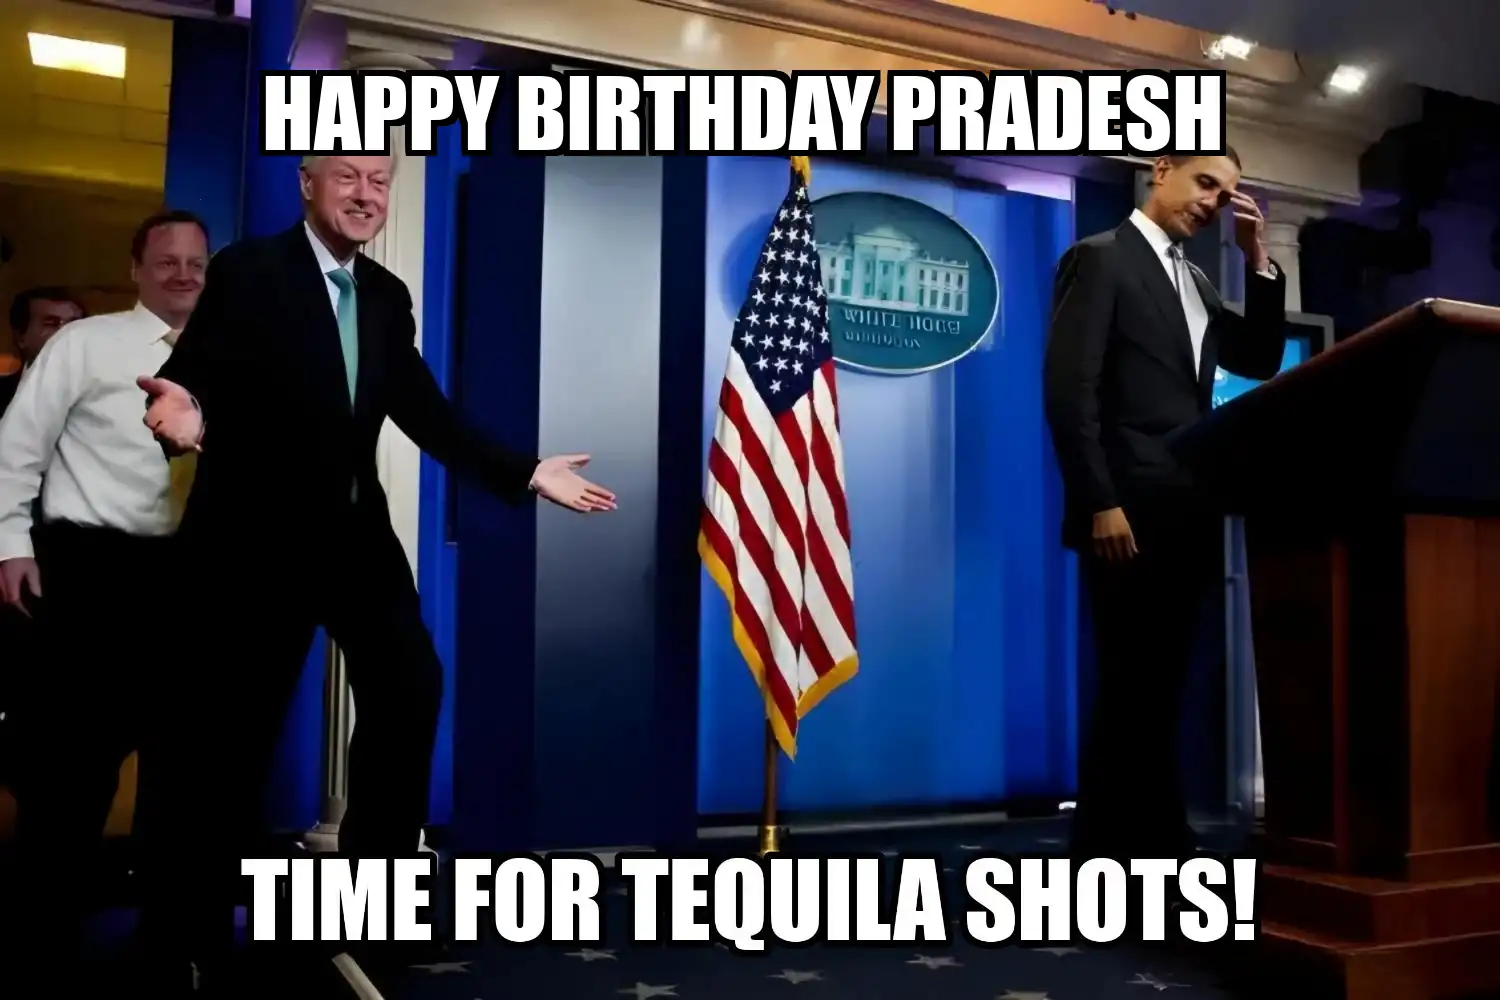 Happy Birthday Pradesh Time For Tequila Shots Memes